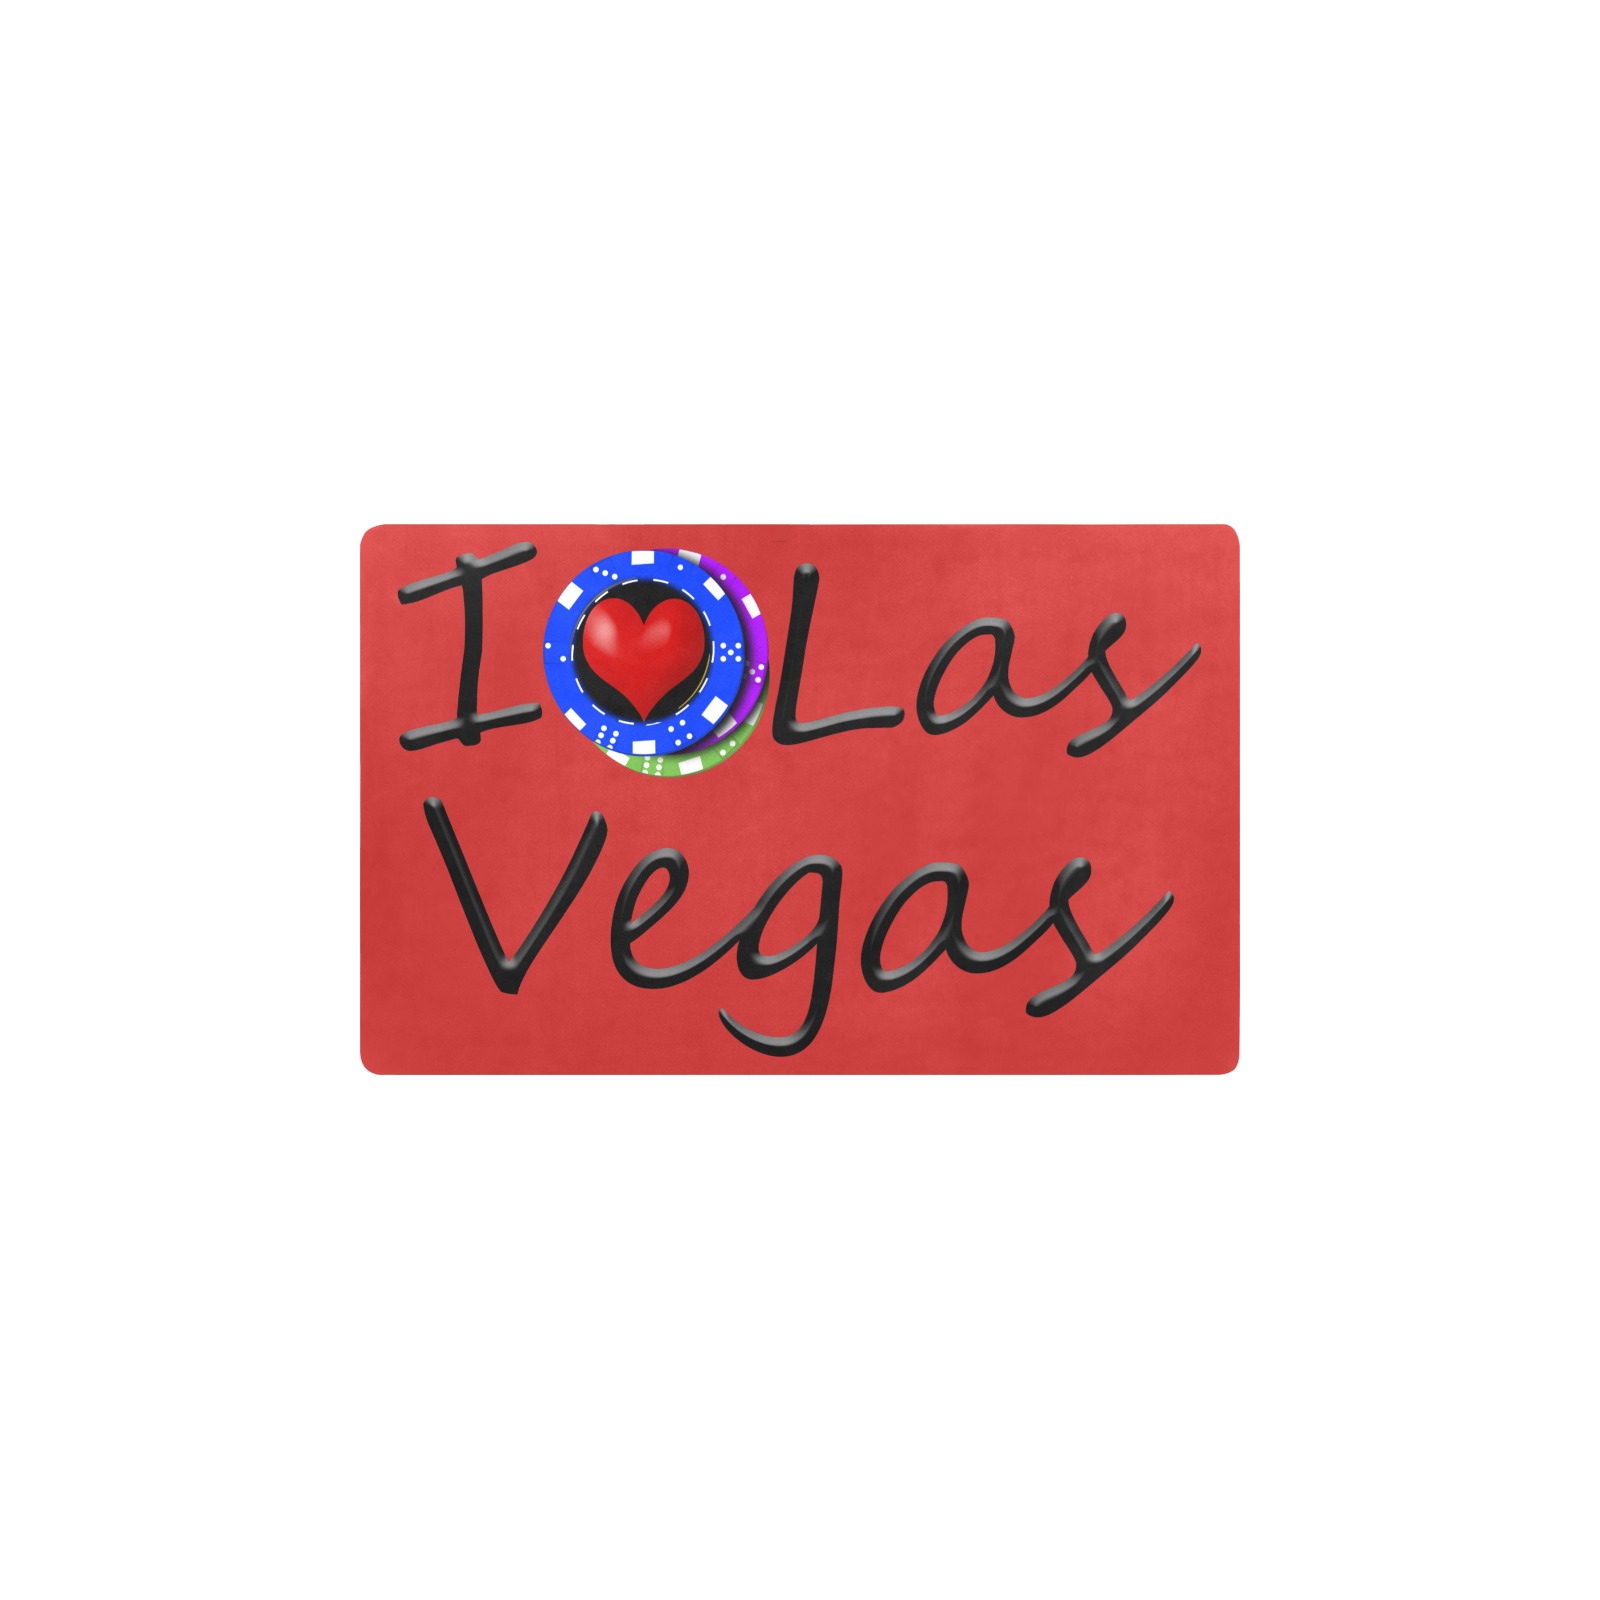 I Love Las Vegas / Red Kitchen Mat 28"x17"